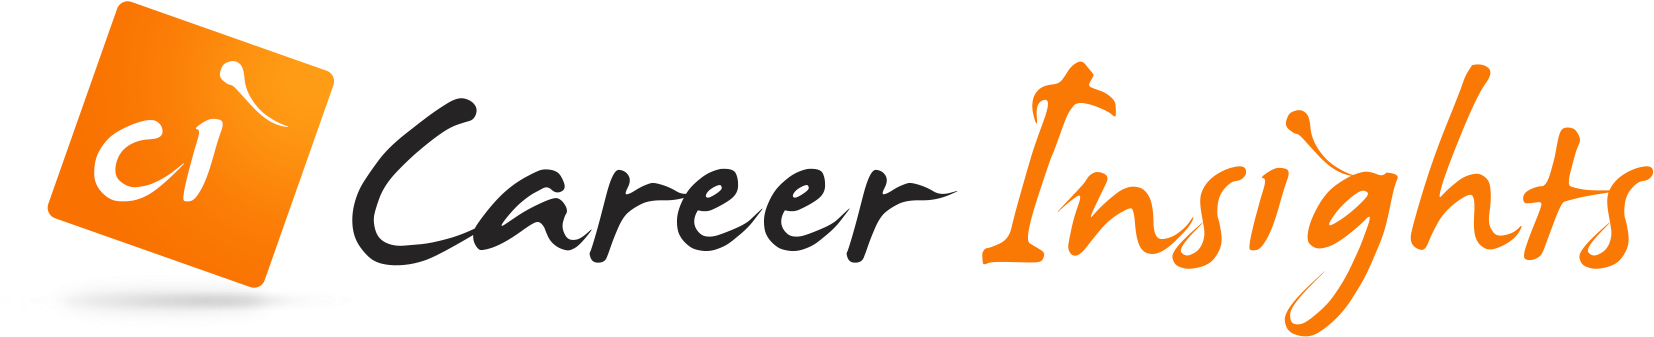 Career Insights Logo Branding PNG